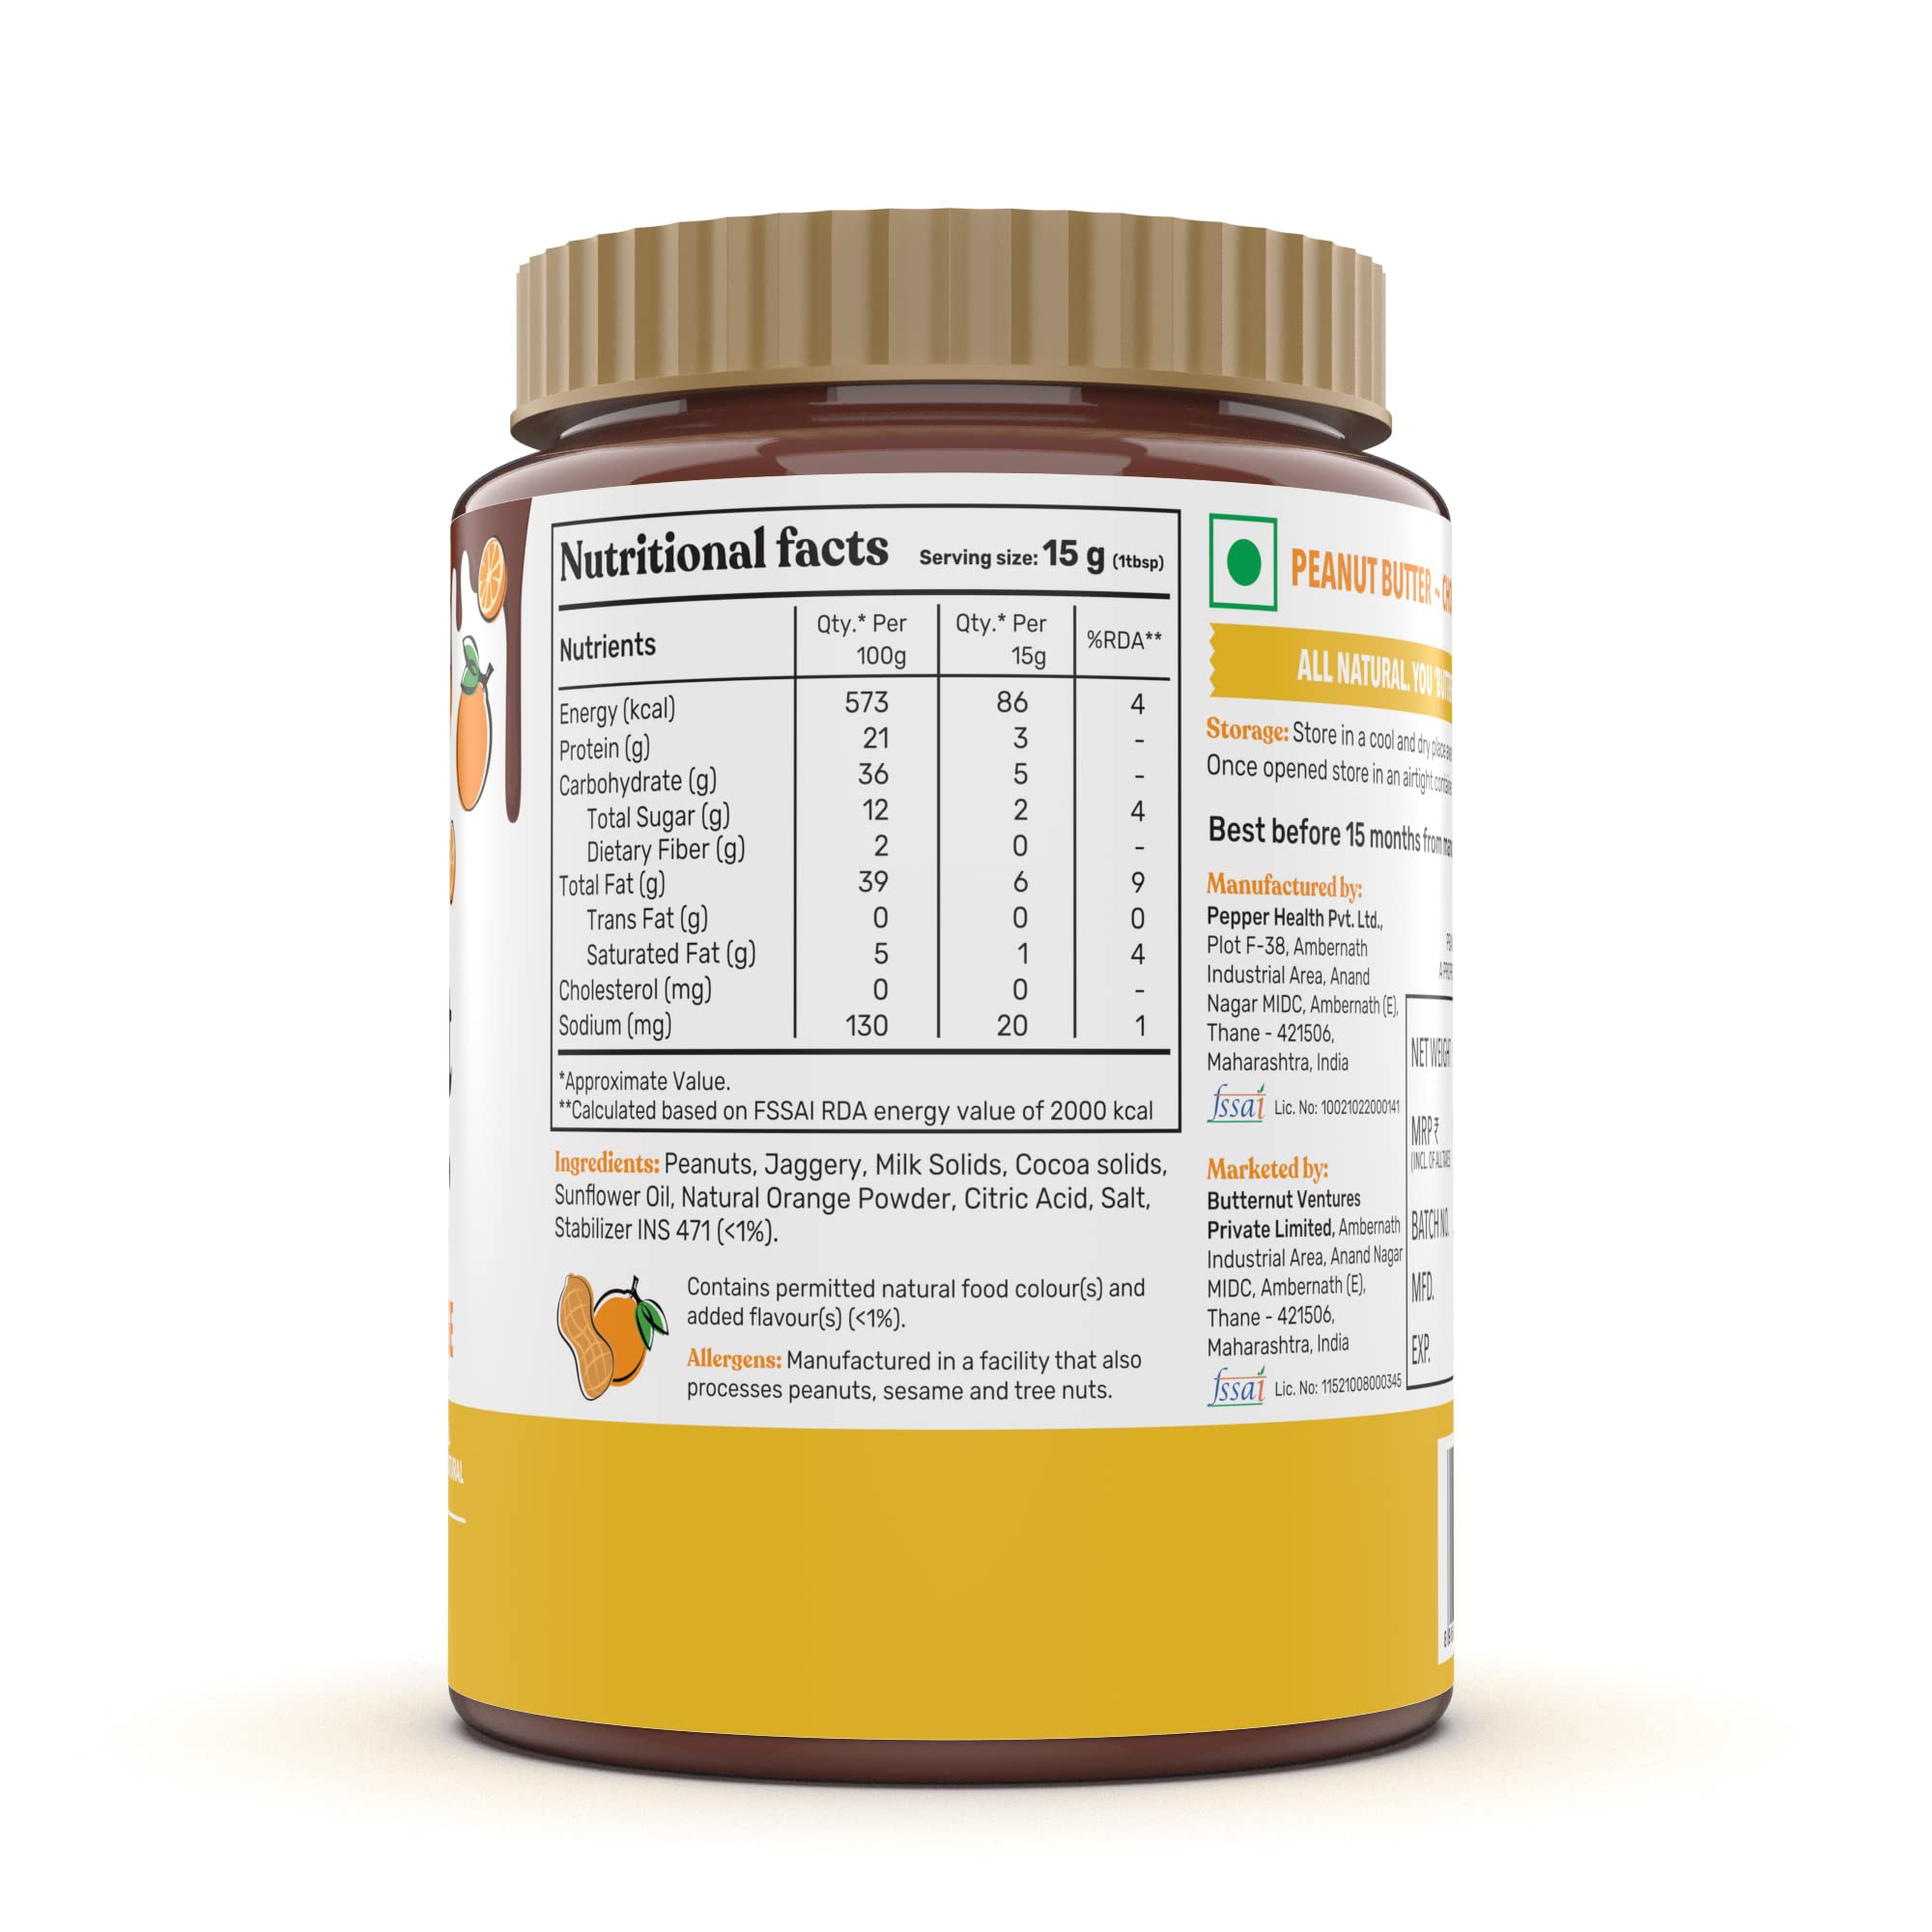 The Butternut Co. Chocolate Orange Peanut Butter (Creamy) 925g | 21 g Protein | No Refined Sugar | Natural | Gluten Free | Cholesterol Free | No Trans Fat